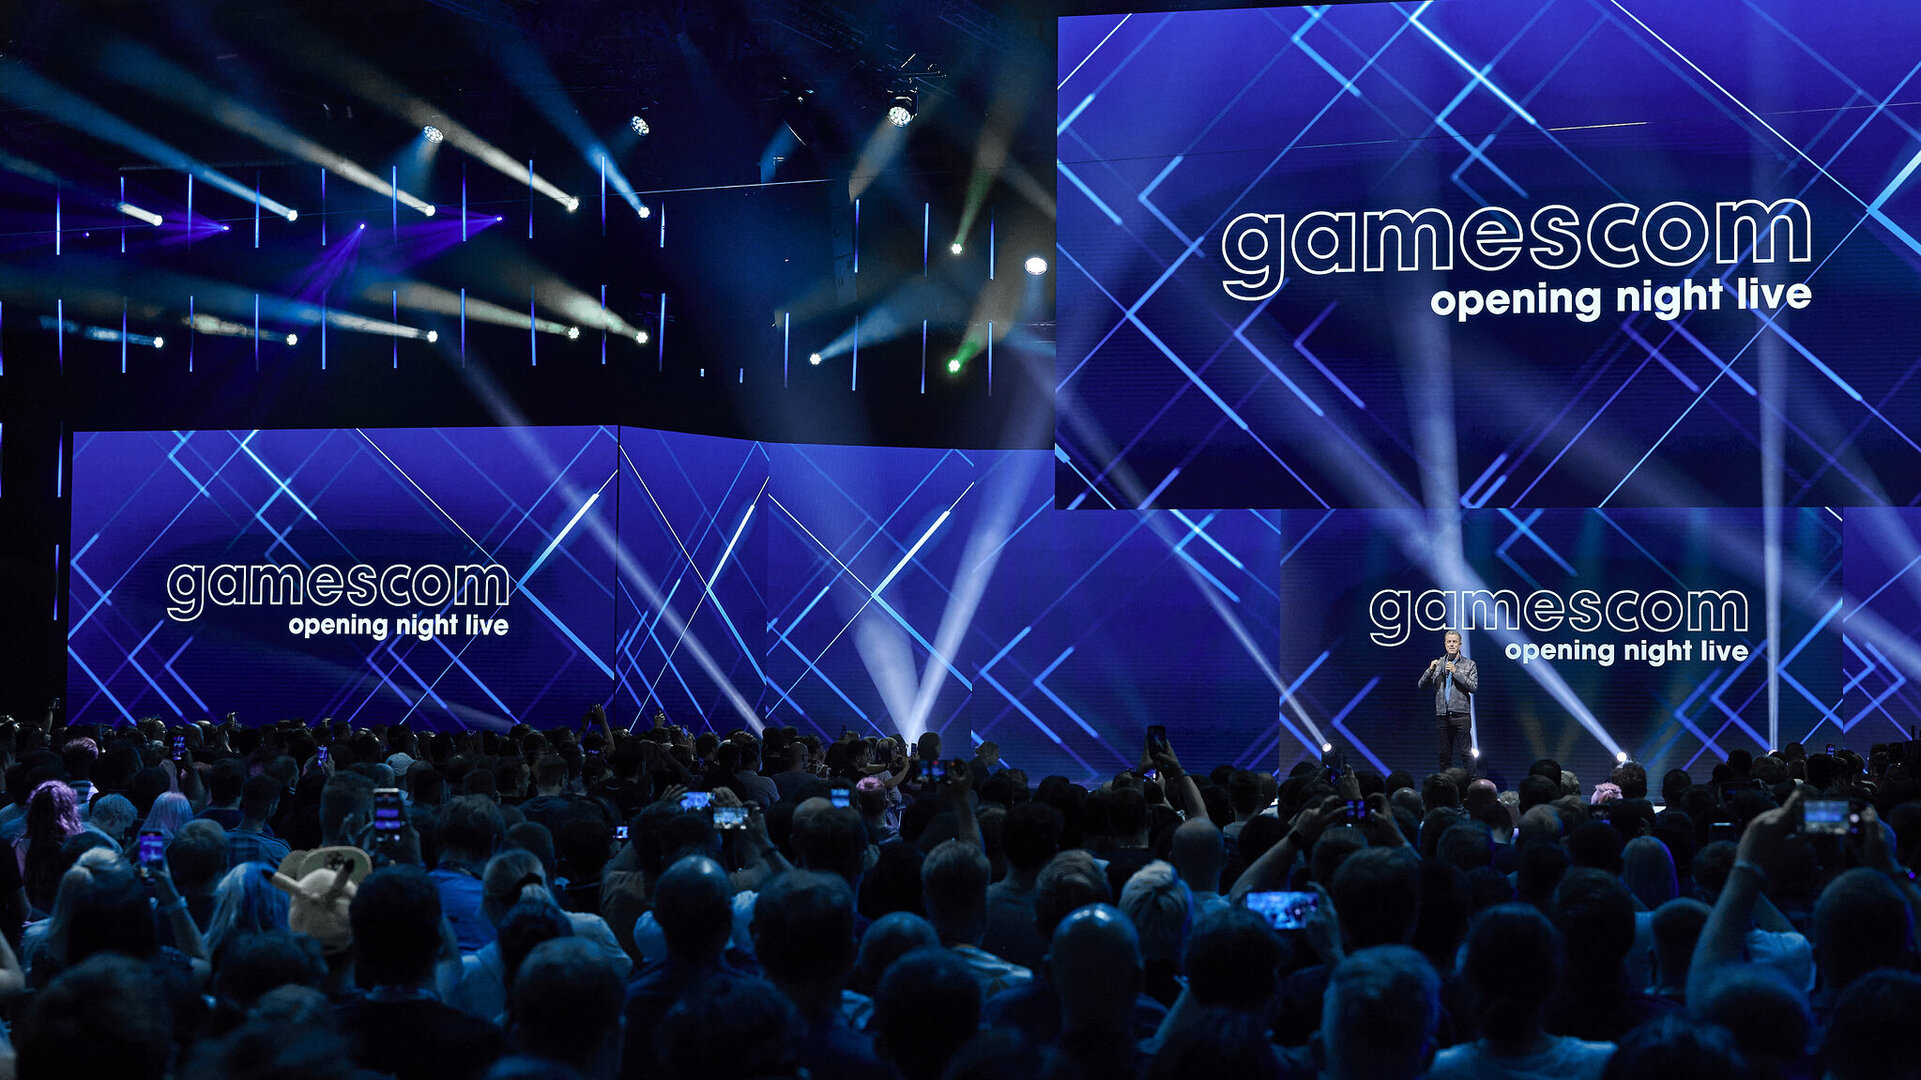 Gamescom 2022 Opening Night Live event